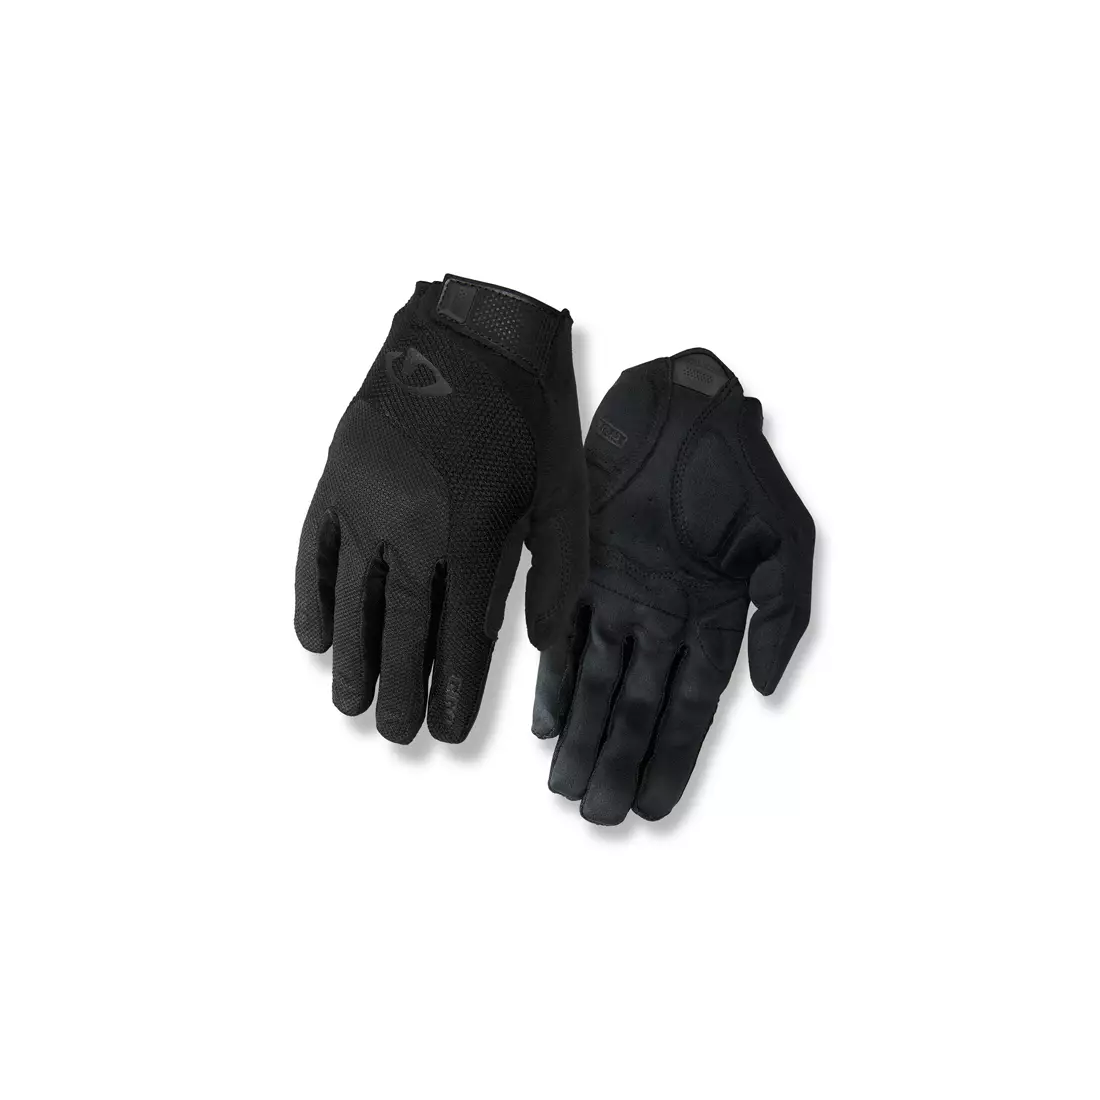 GIRO BRAVO LF GEL cycling gloves, black